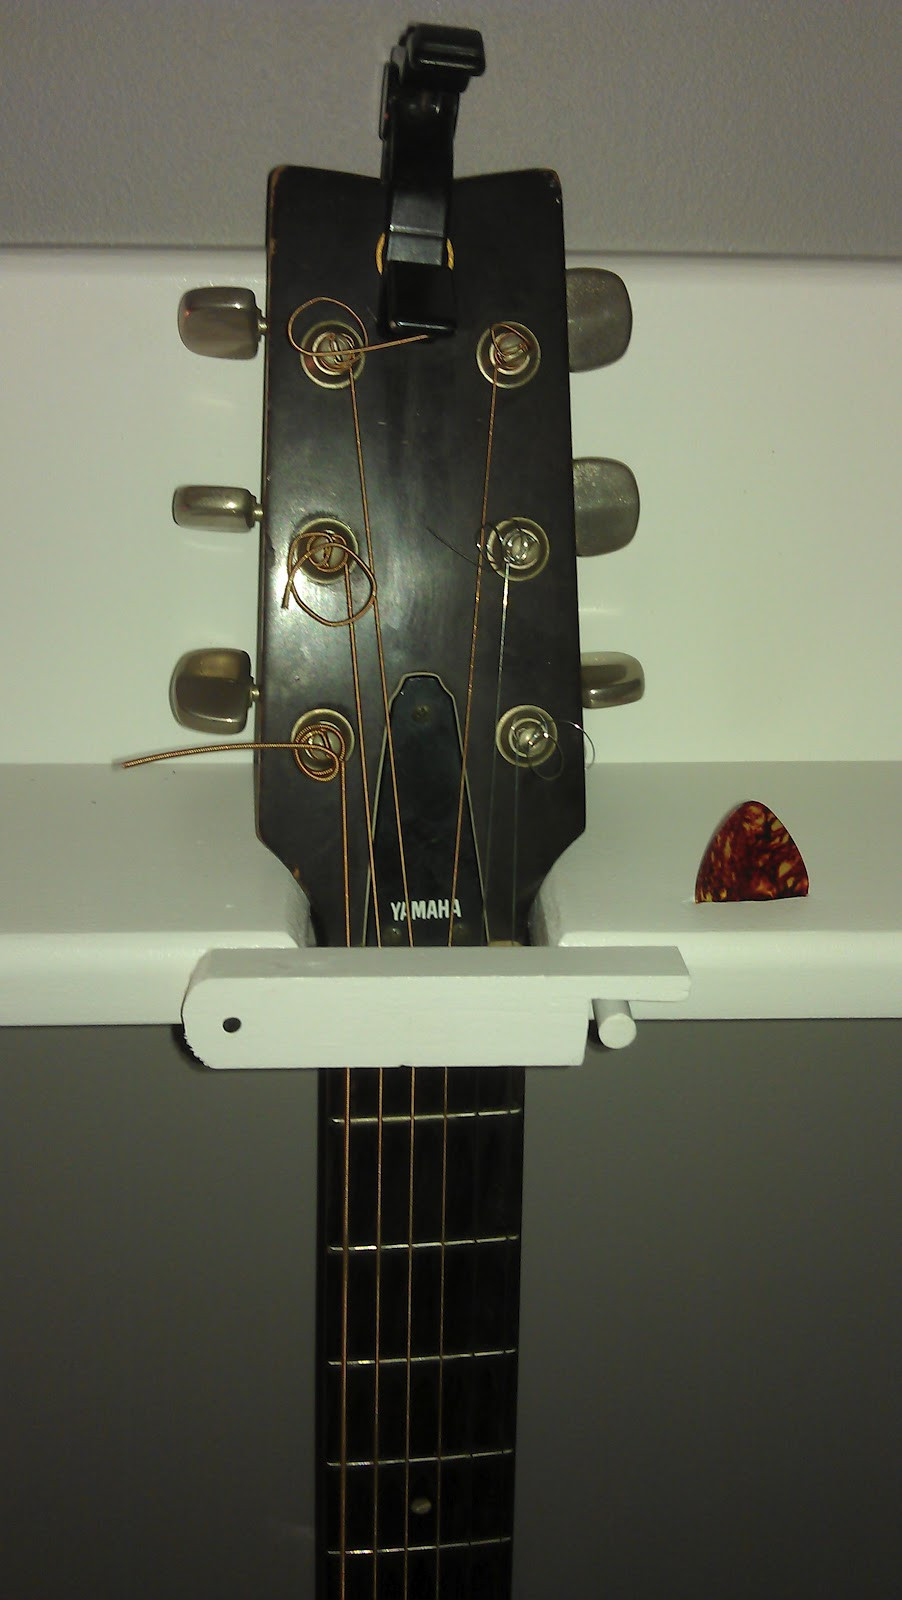 Best ideas about Guitar Wall Hanger DIY
. Save or Pin DIY 4 Guitar Wall Hanger Cost $15ish FEATURED AS AN Now.